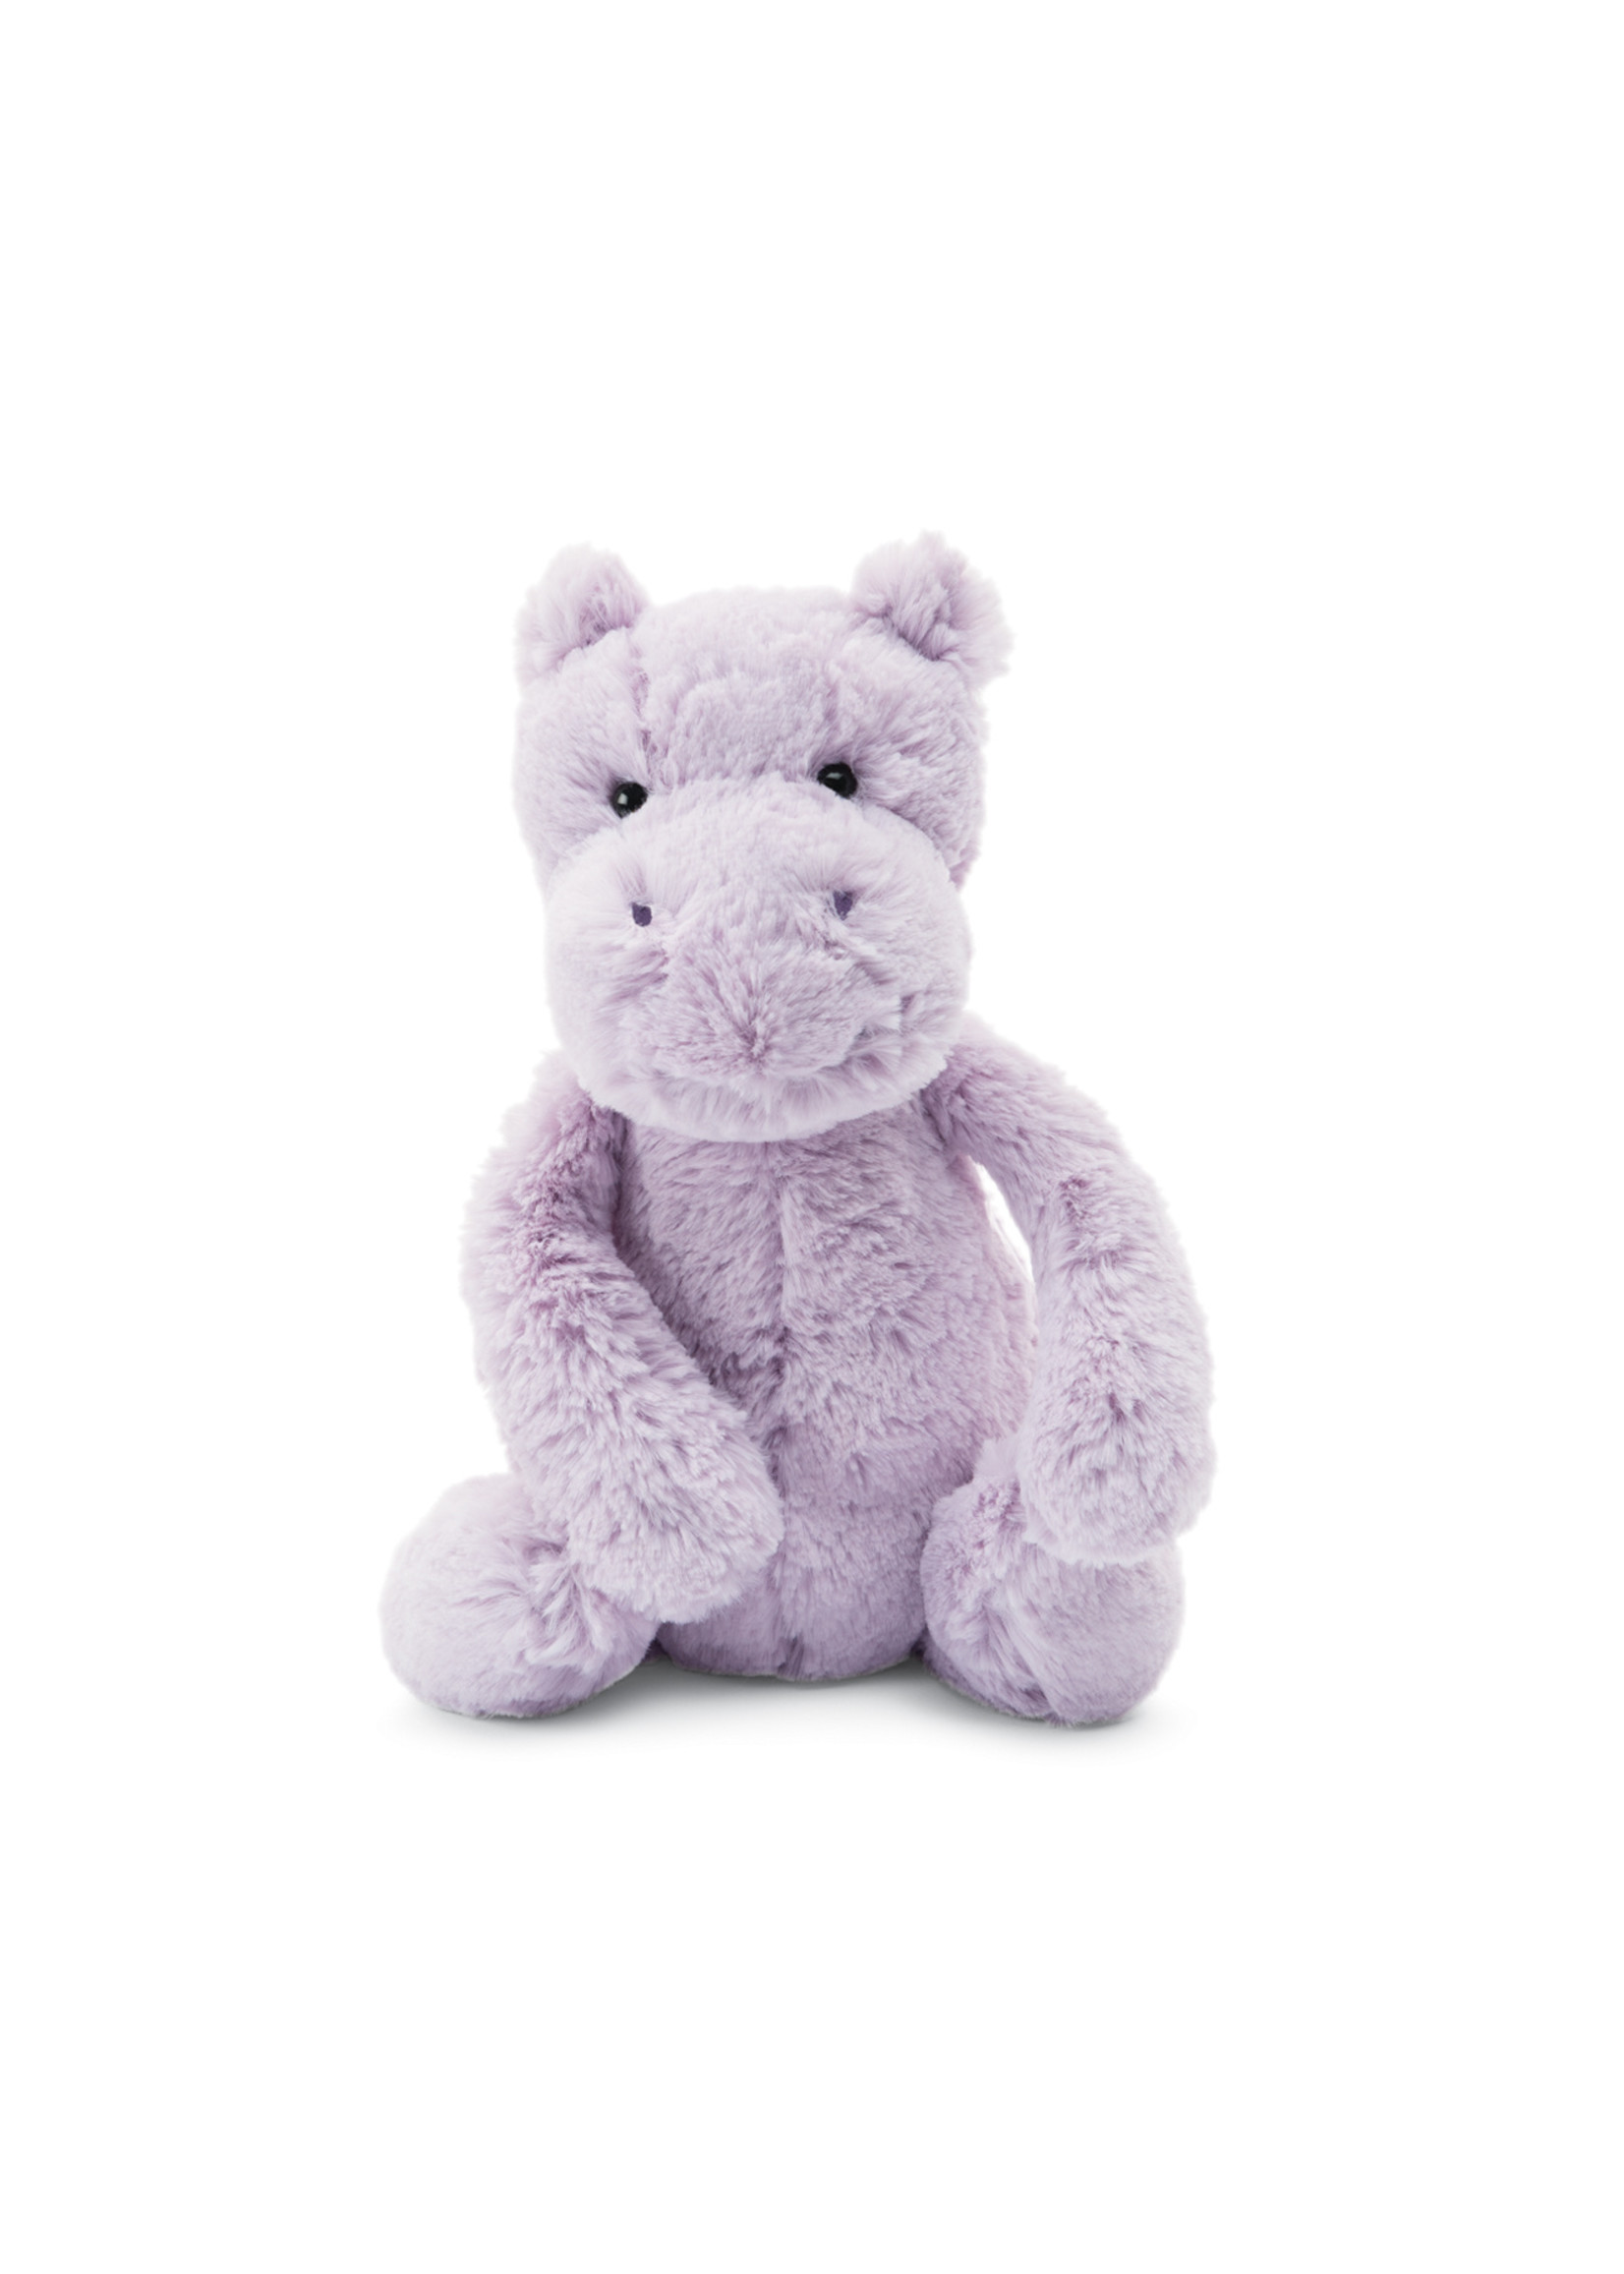 Jellycat Bashful Lilac Hippo - Medium